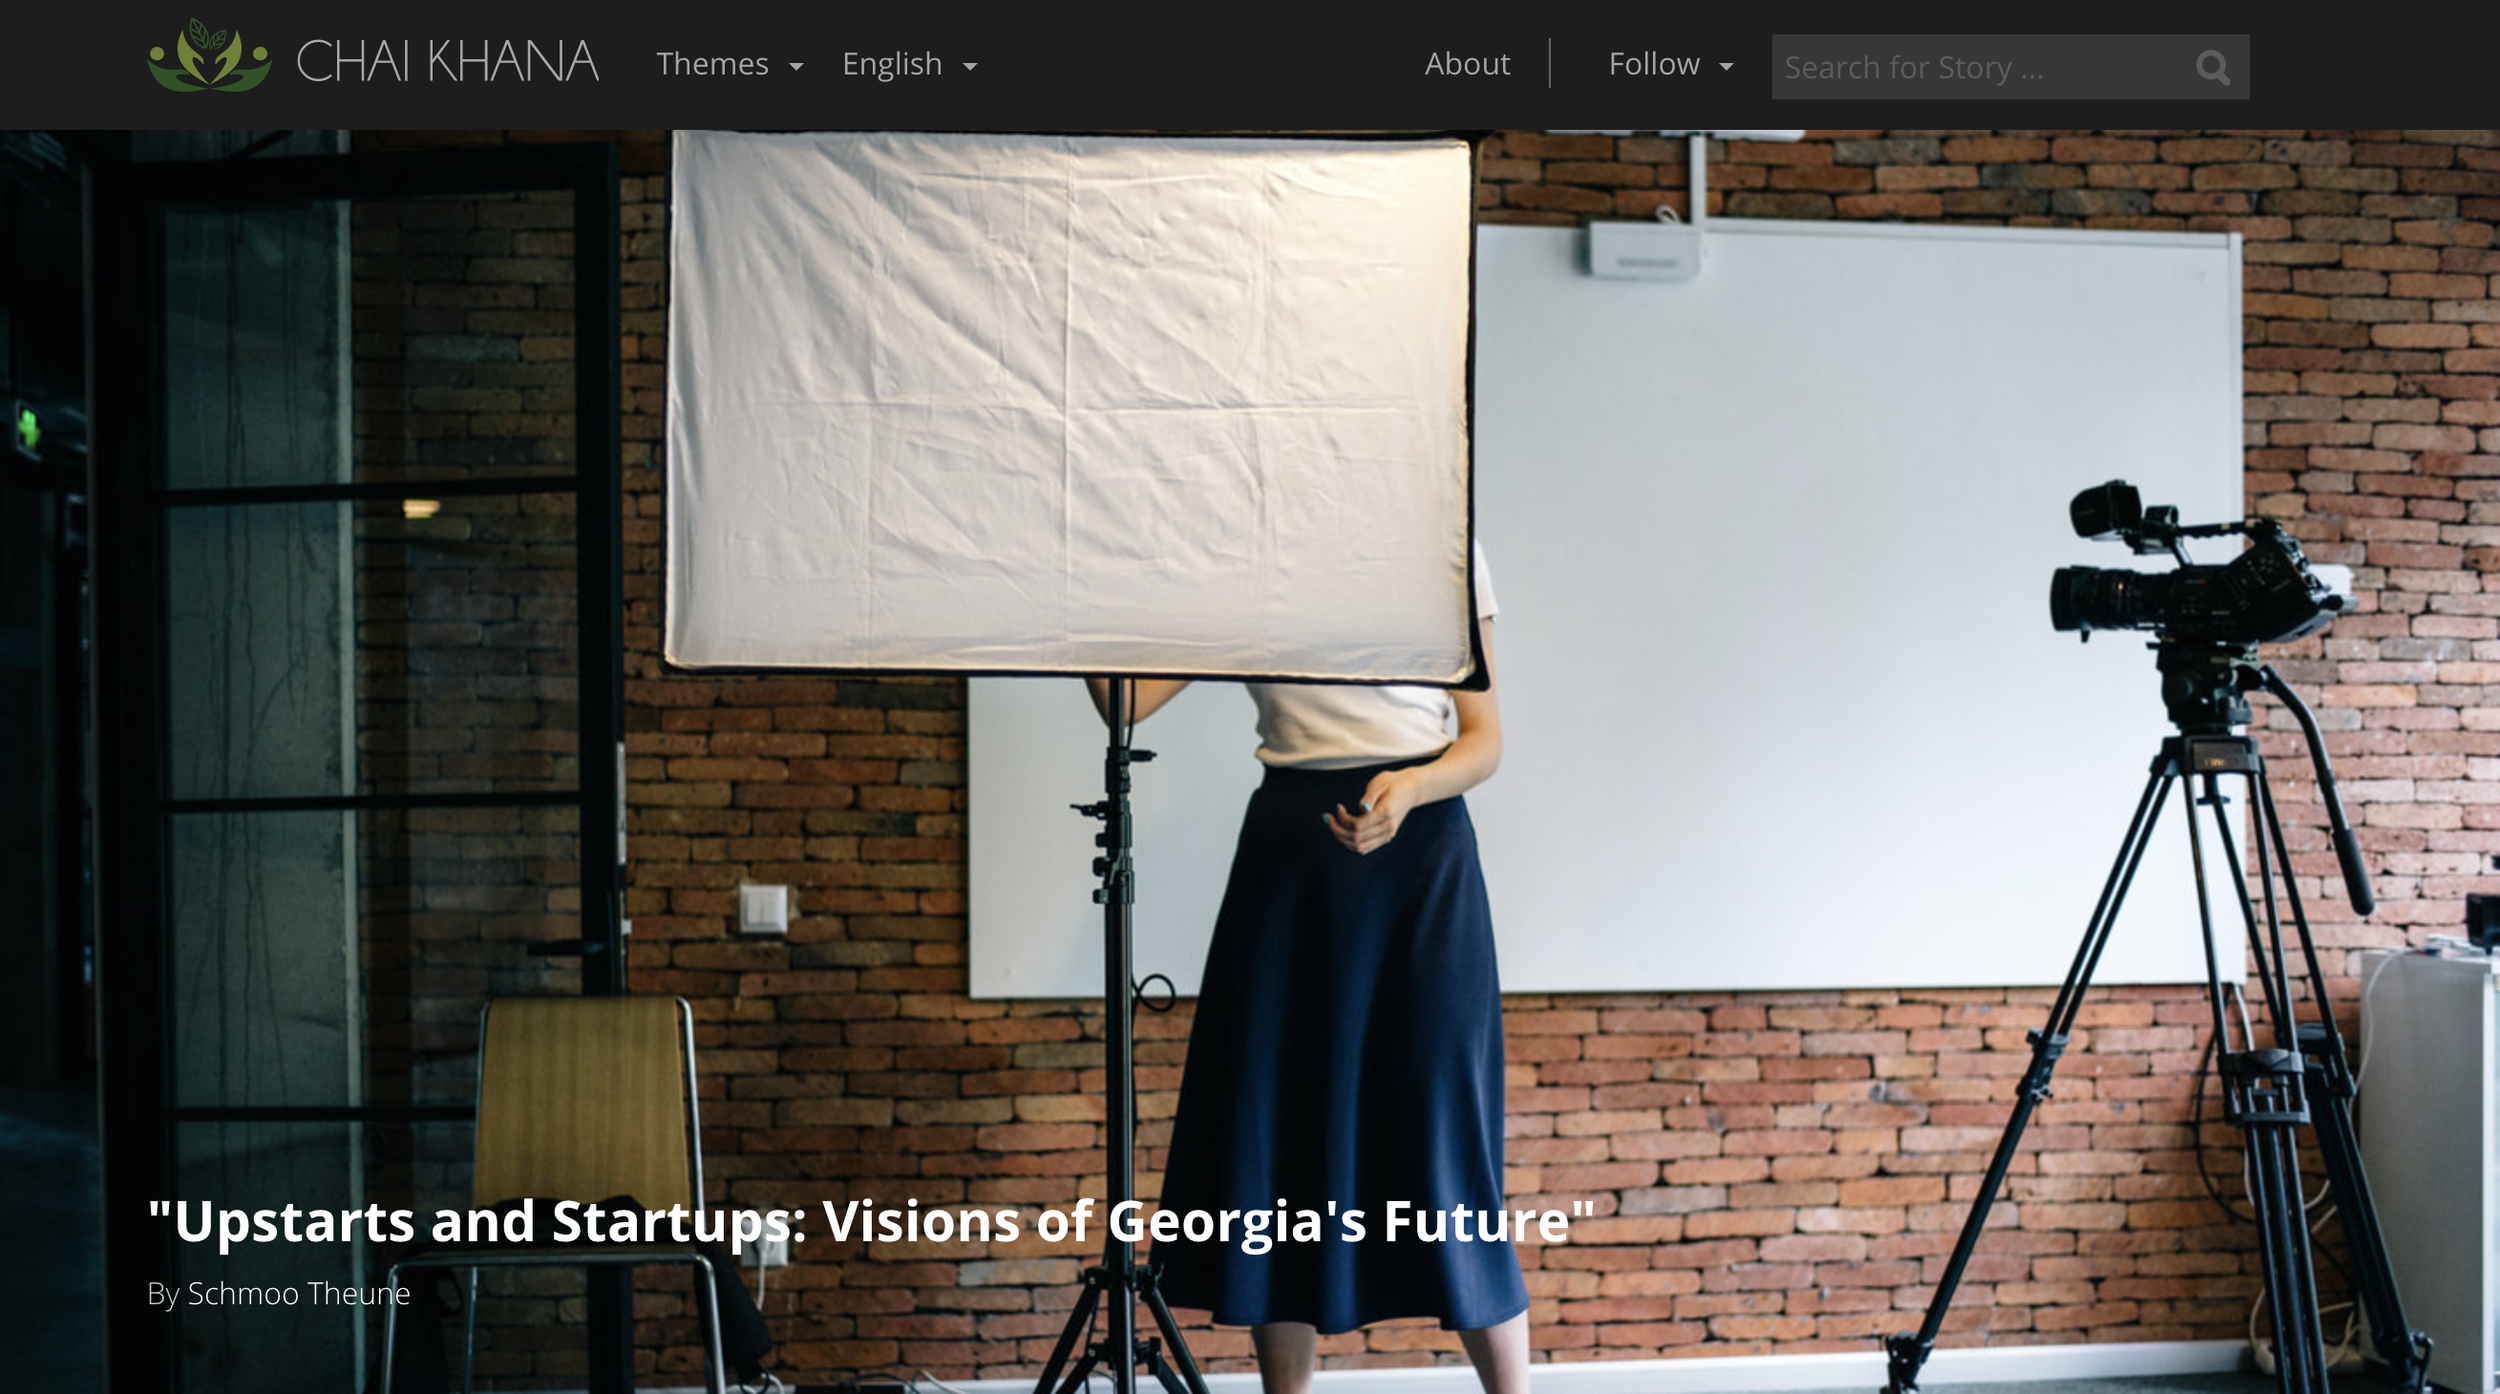 _Upstarts_and_Startups__Visions_of_Georgia_s_Future____Schmoo_Theune___Chai_Khana.png